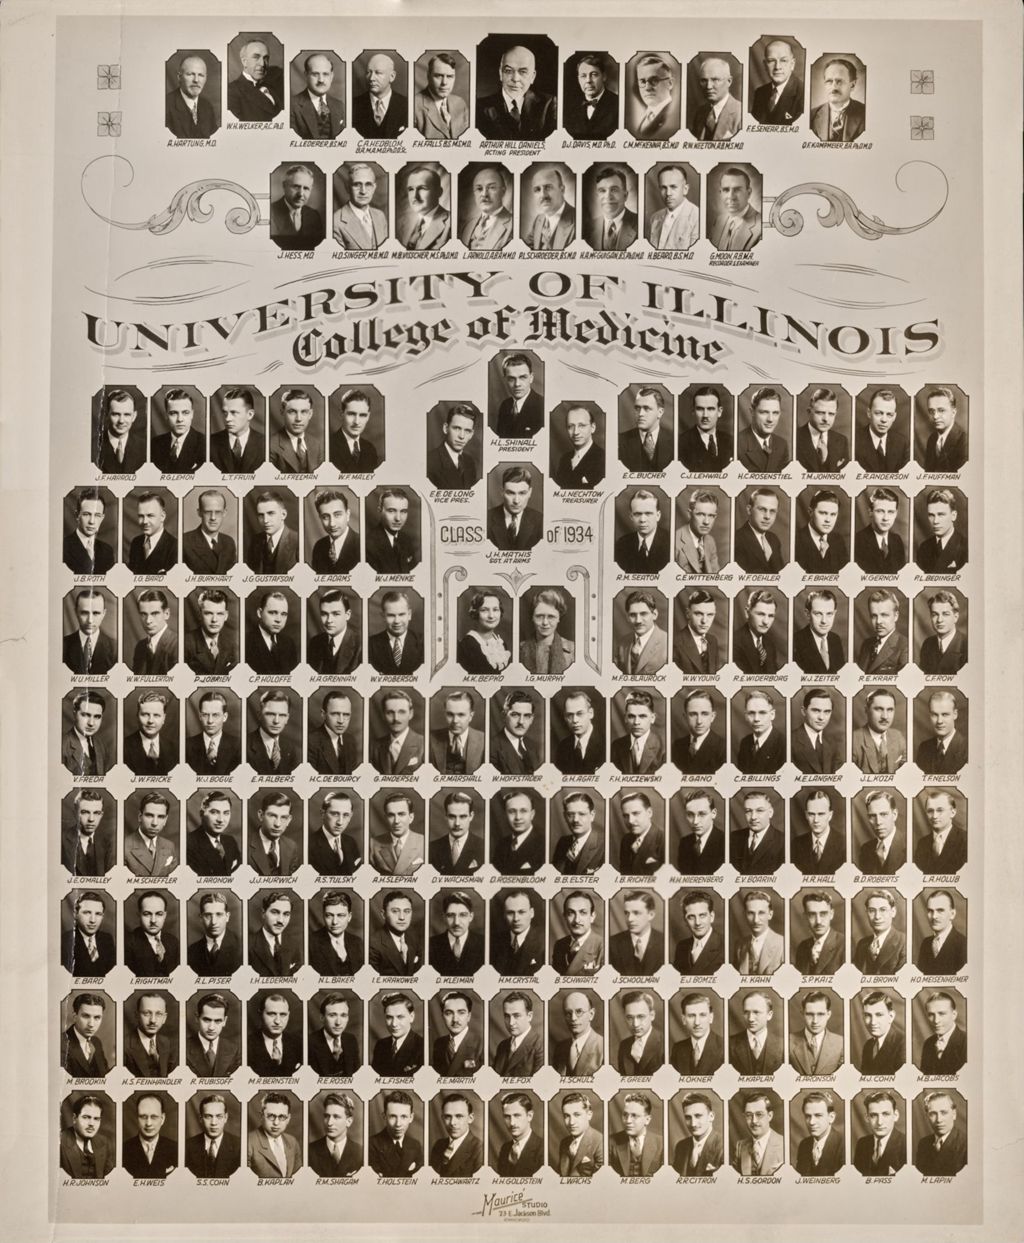 Miniature of 1934 graduating class, University of Illinois College of Medicine